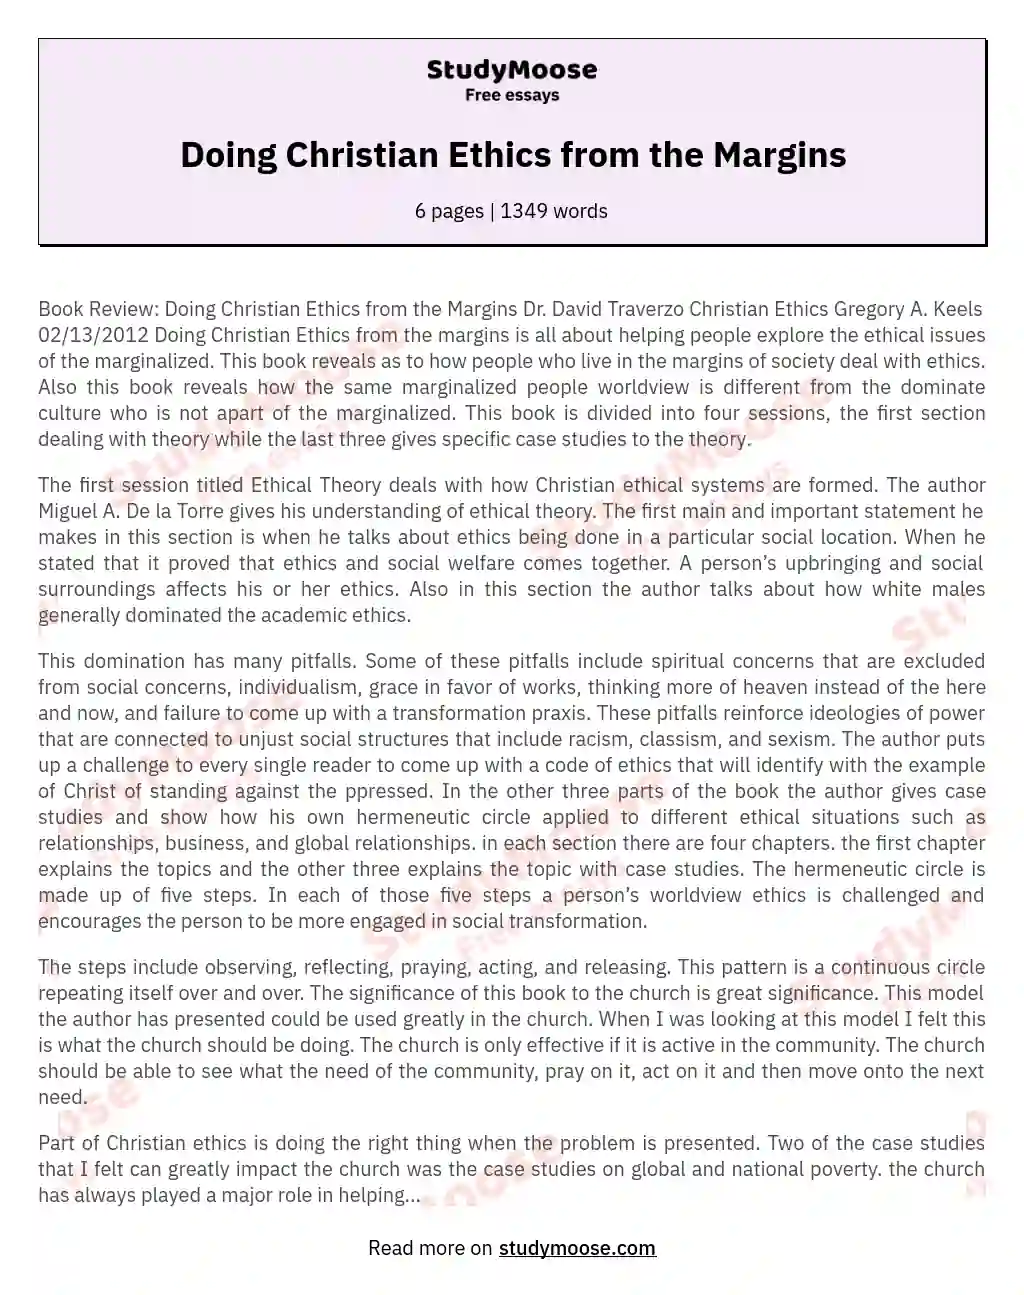 Doing Christian Ethics from the Margins essay